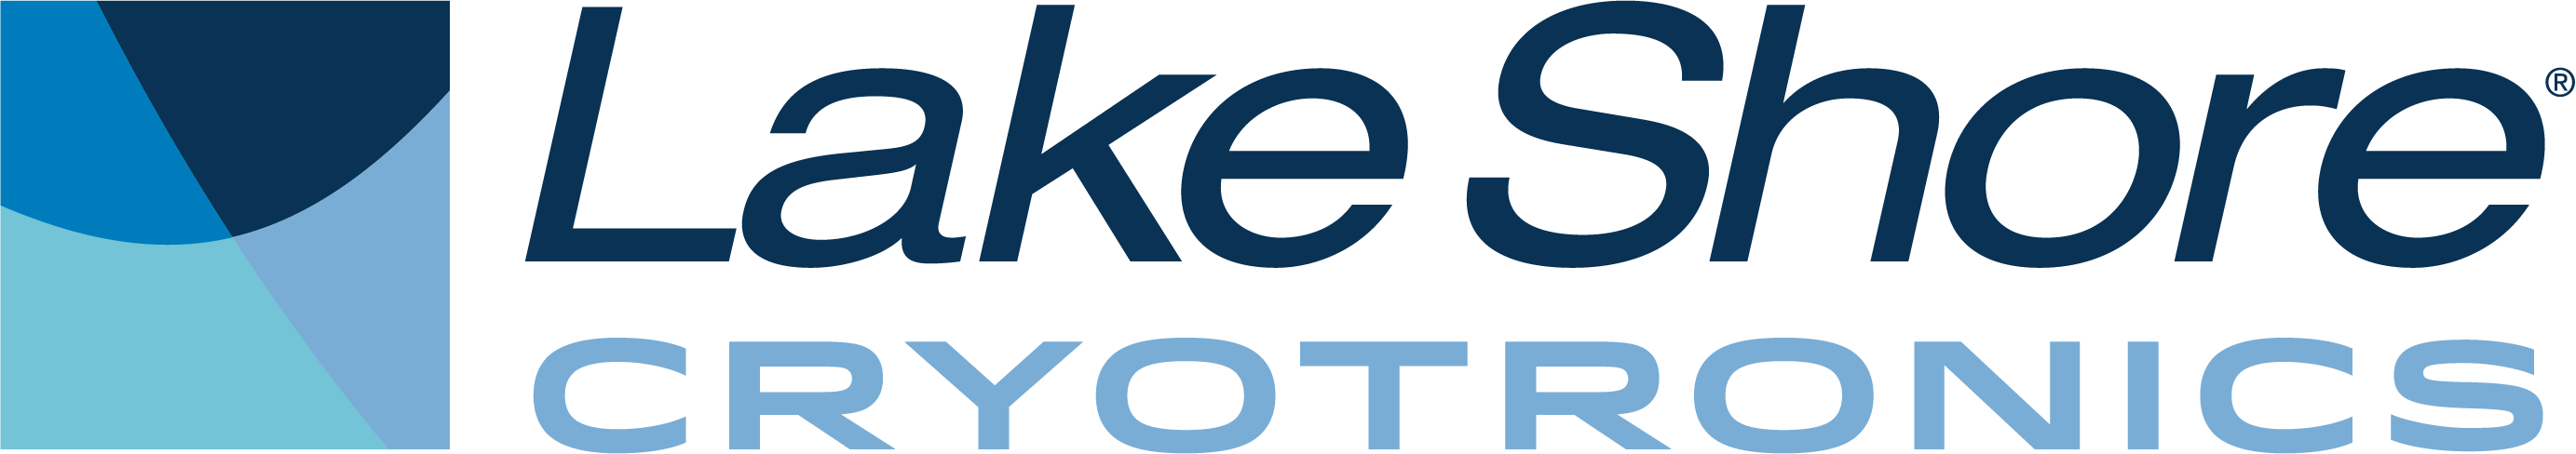 Lake Shore Cryotronics, Inc. Company Logo